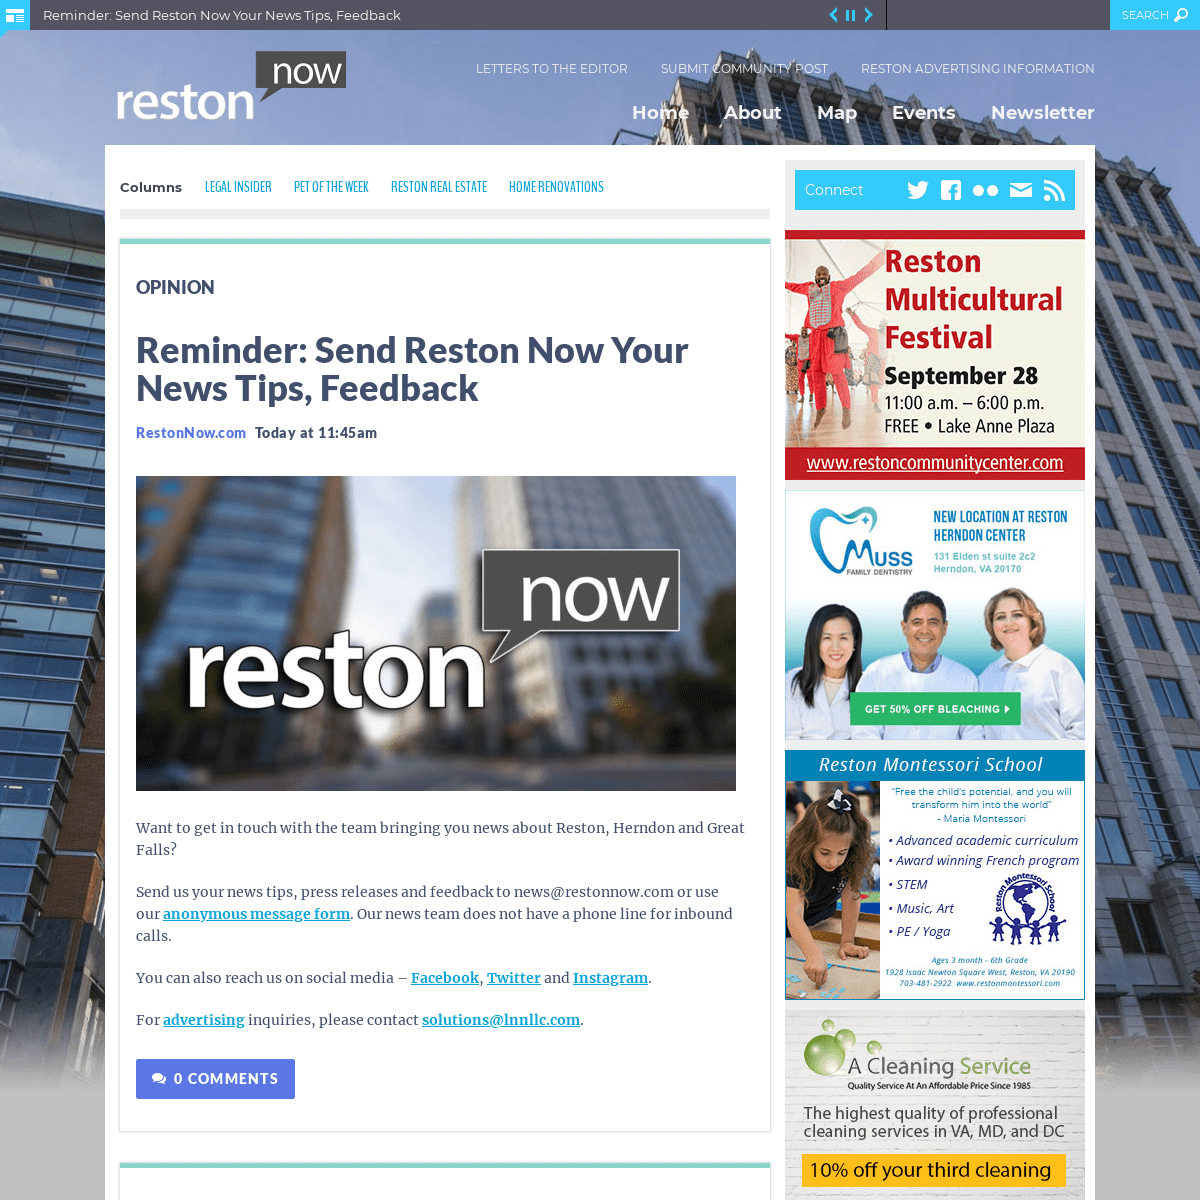 RestonNow.com - Reston, Va. News and Information